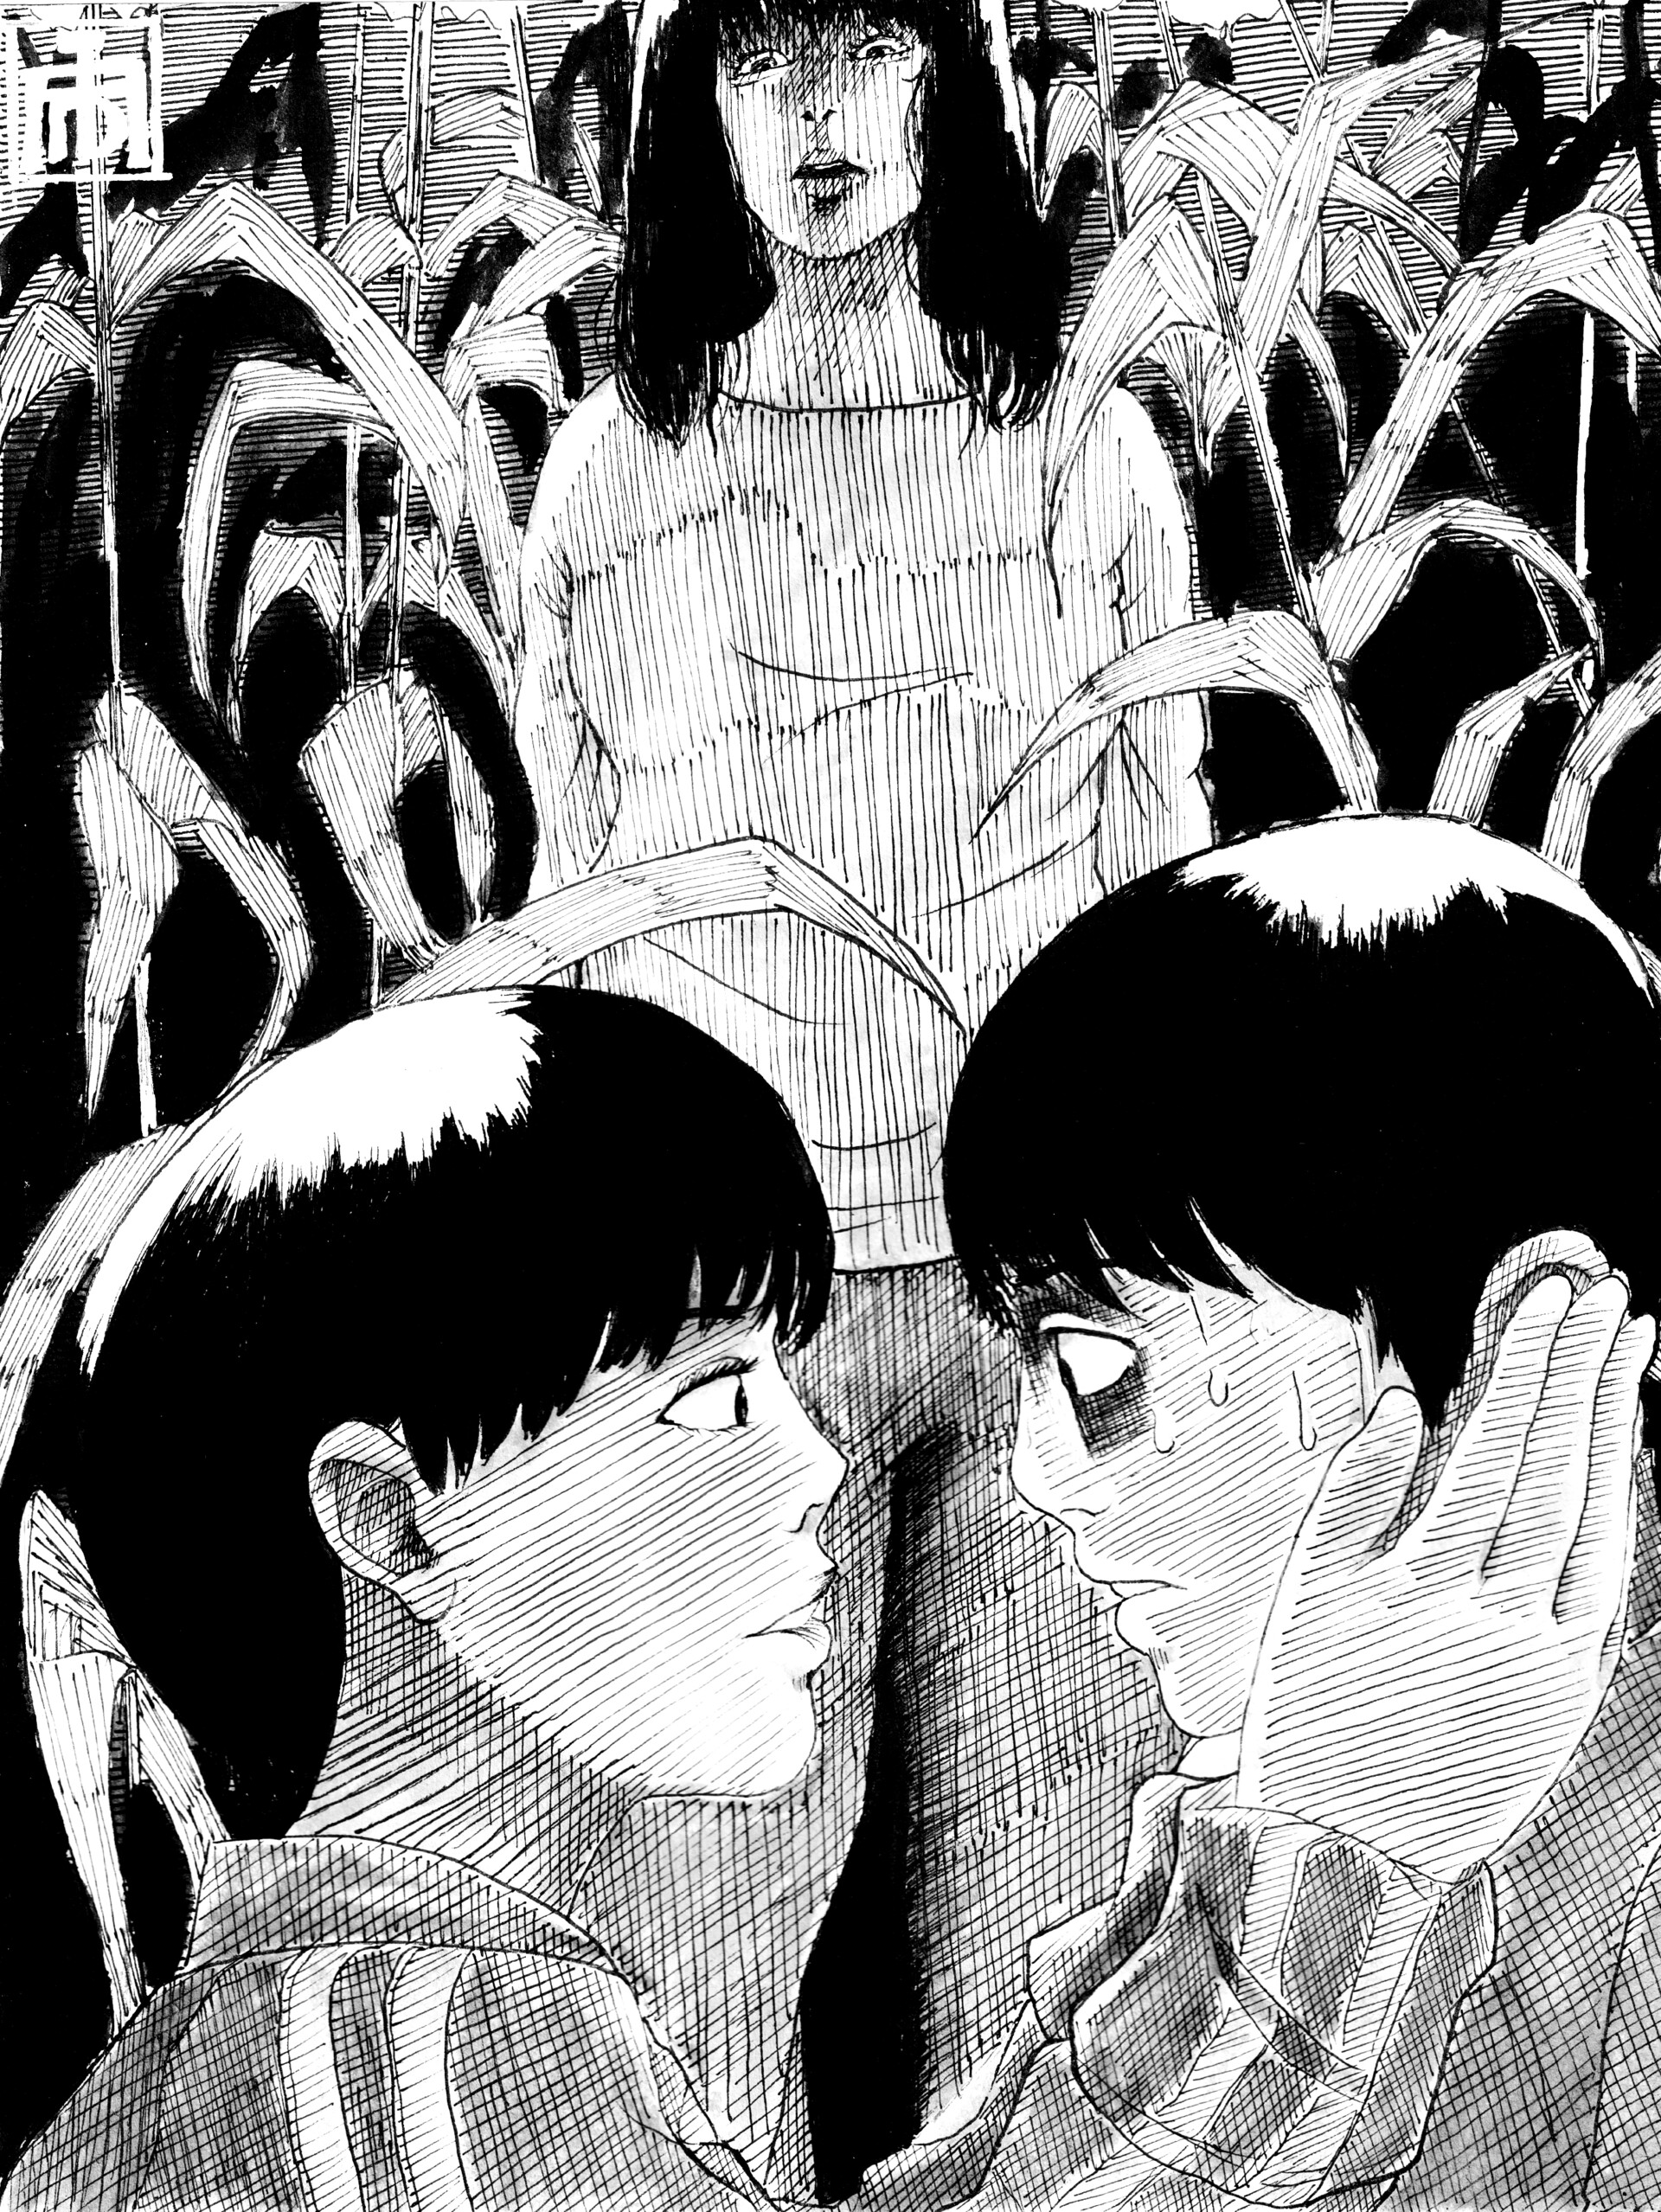 Seinen  A Trail of Blood by Shuuzou Oshimi  MangaHelpers